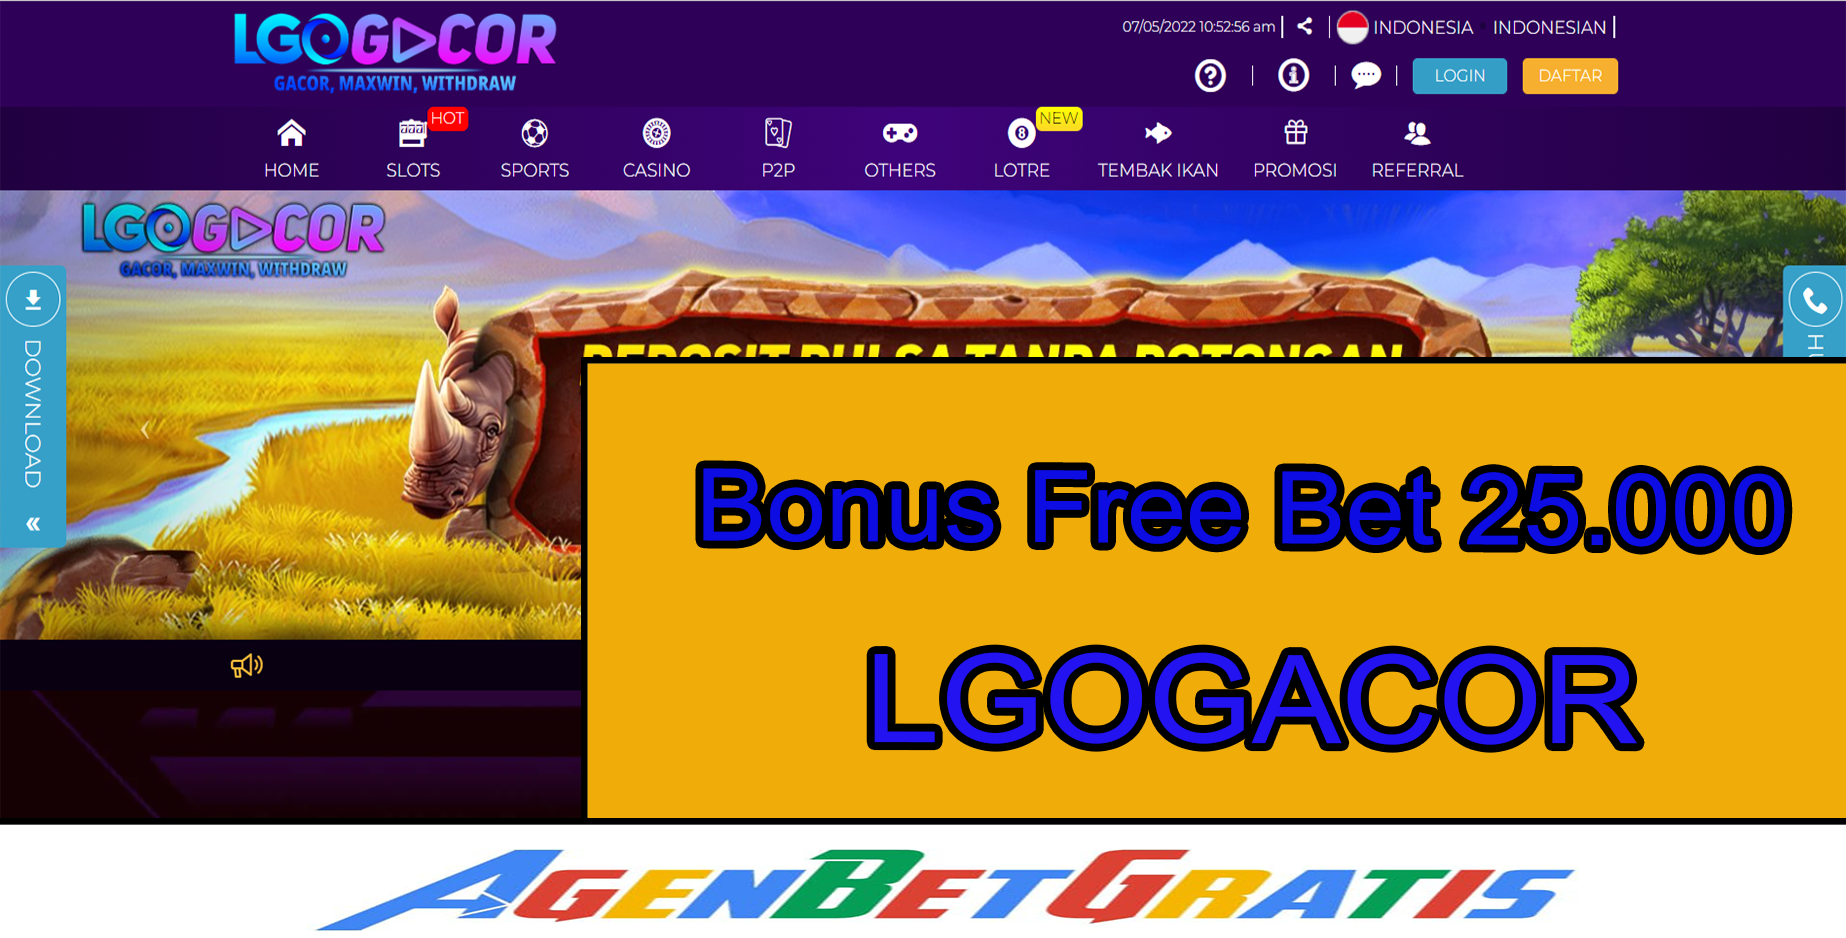 LGOGACOR - Bonus FreeBet 25.000